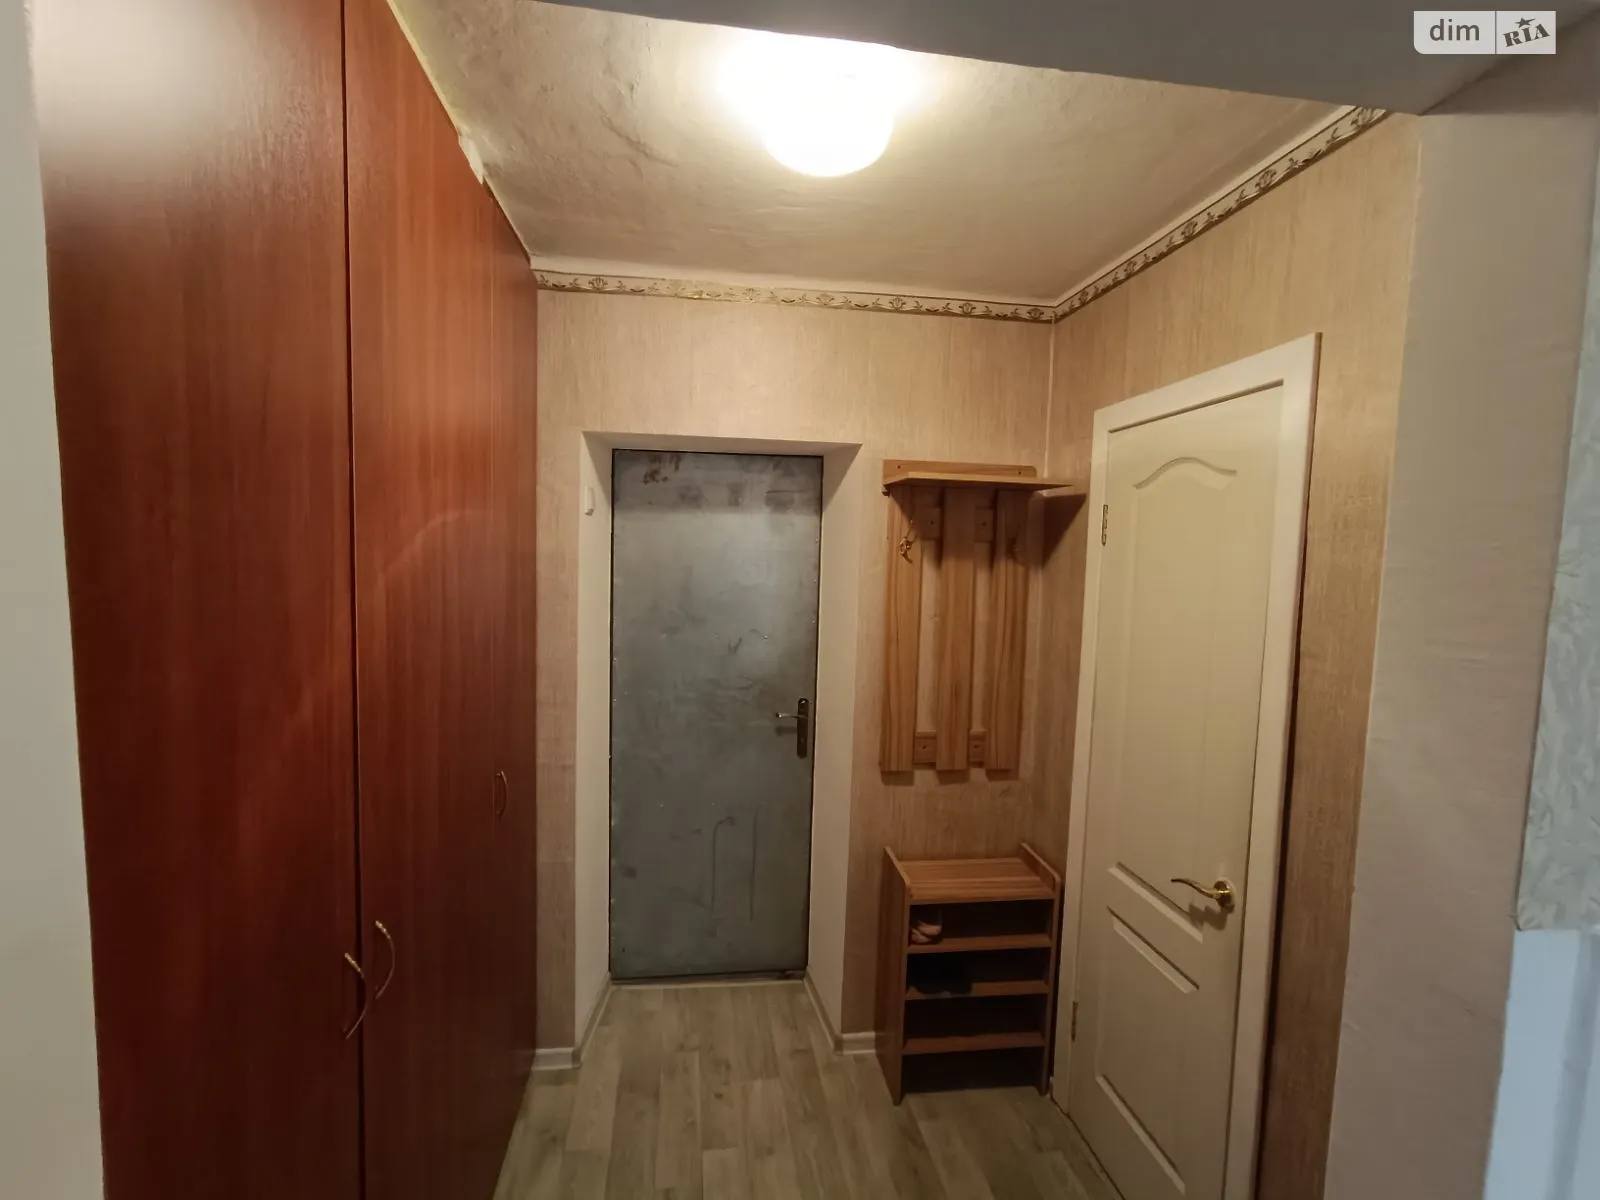 Продается комната 18 кв. м в Николаеве - фото 3